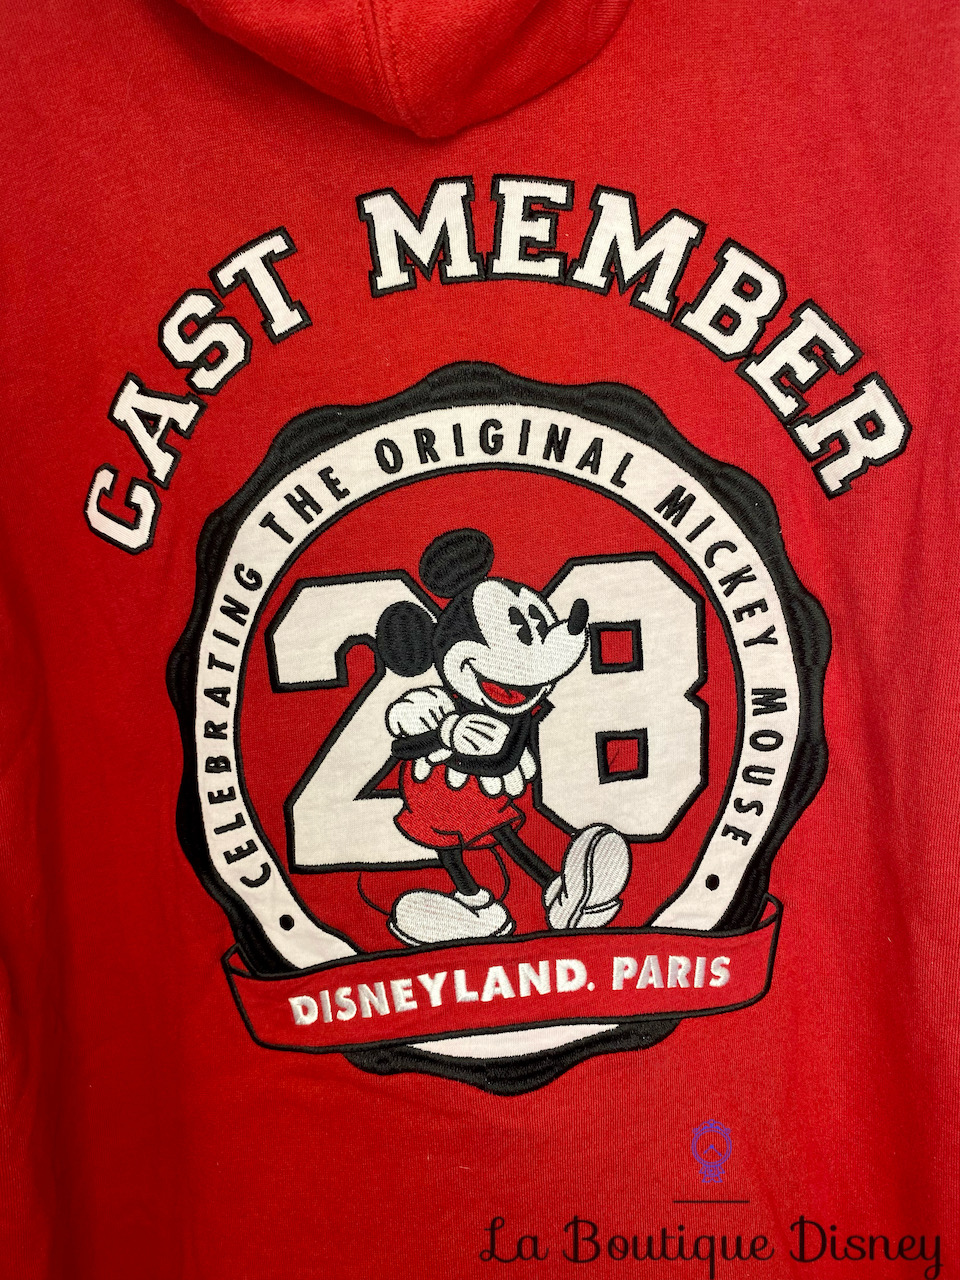 veste-cast-member-disneyland-paris-rouge-celebrating-the-original-mickey-mouse-28-disney-6